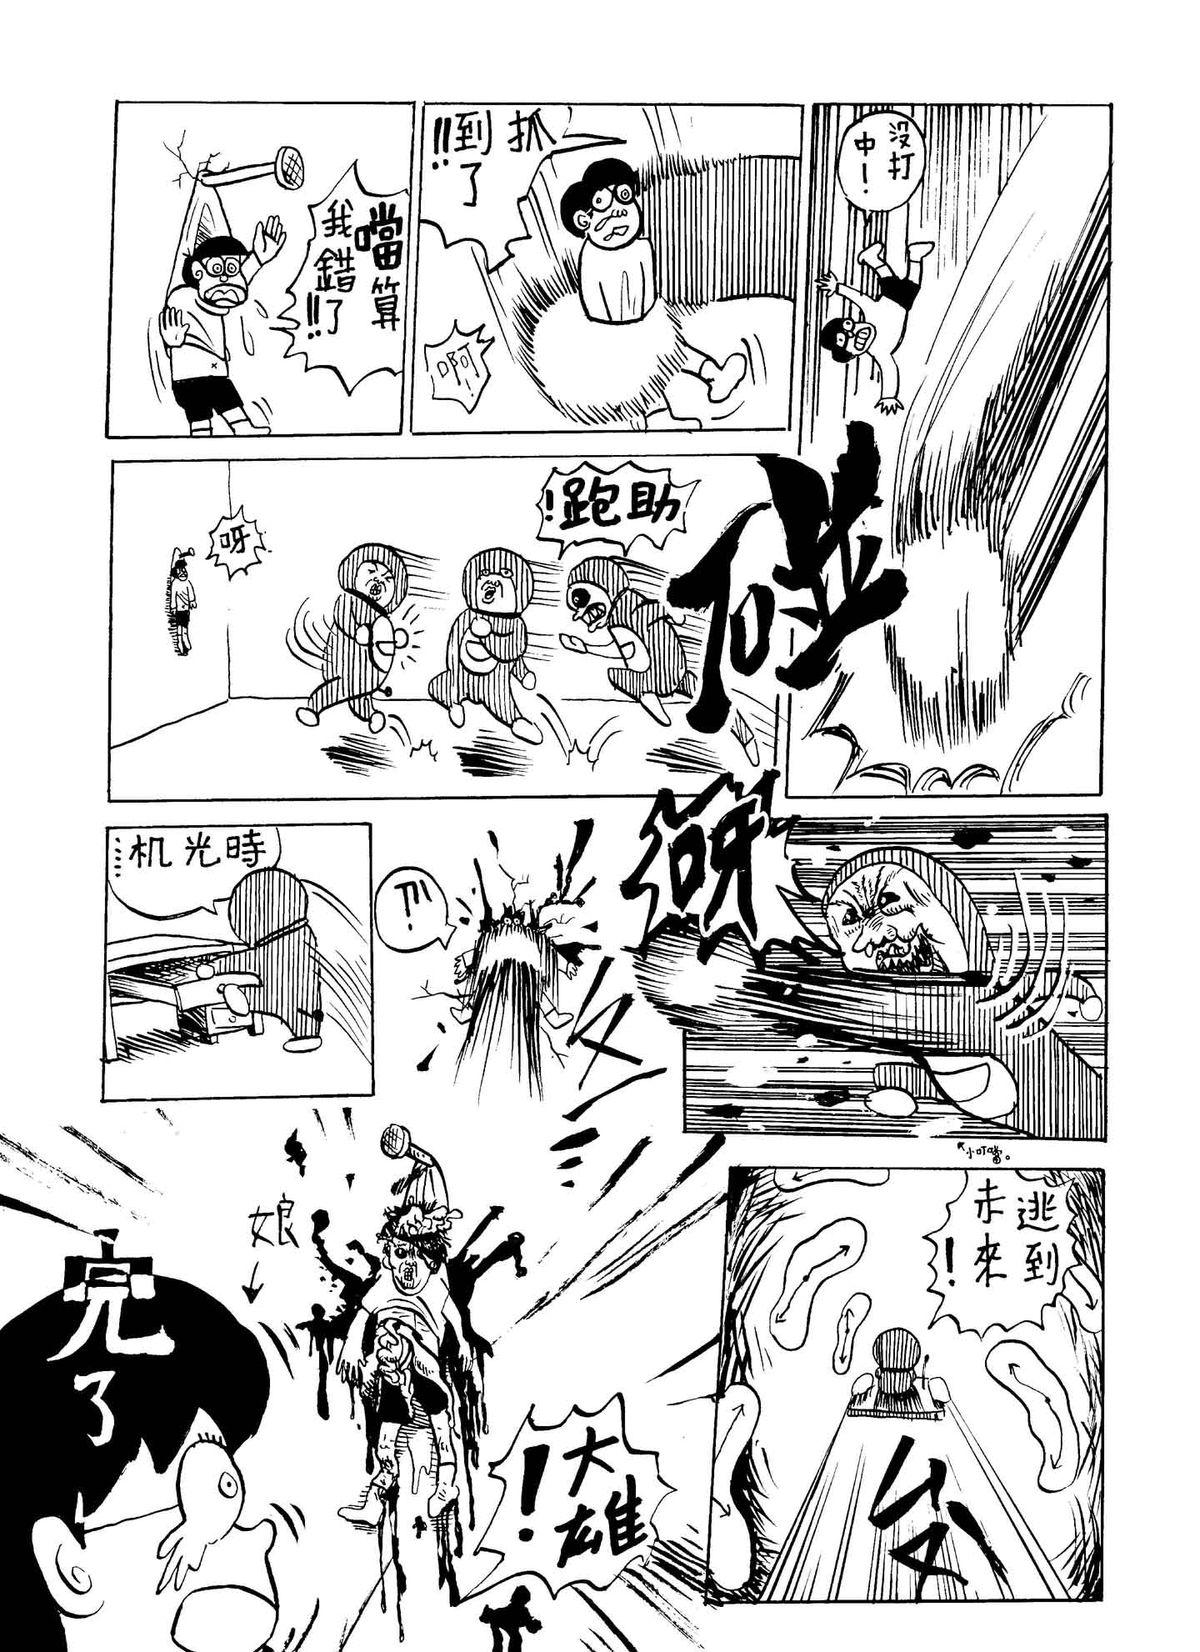 Amateurs Gone Xiao Ding Dang! - Doraemon Rabo - Page 3